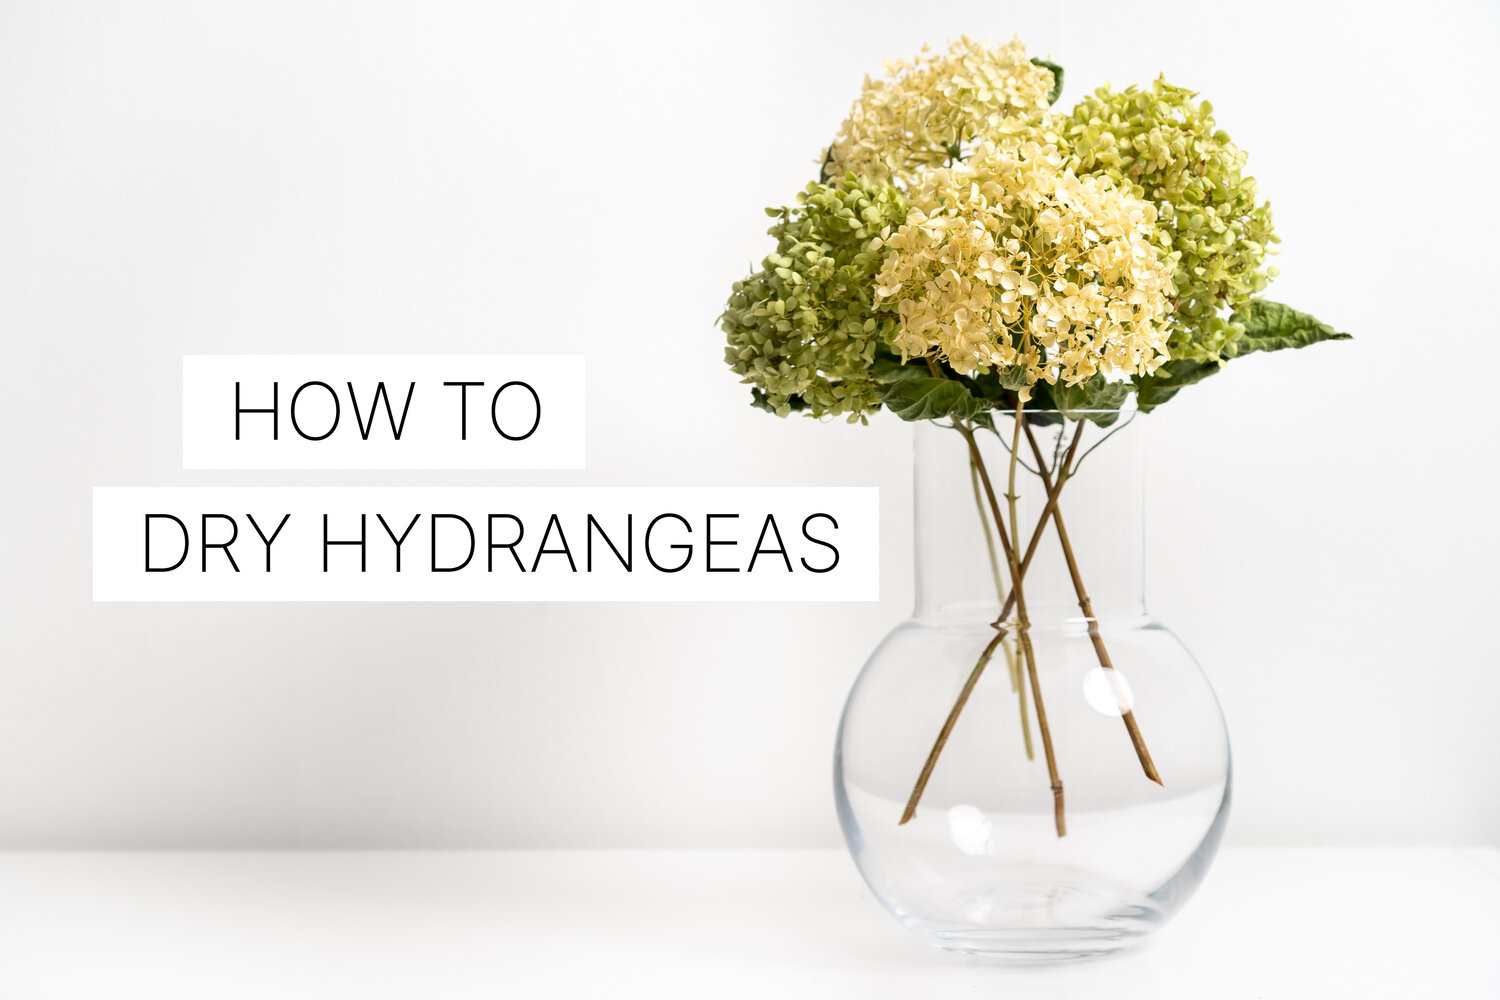 Drying Hydrangeas - the Right Way